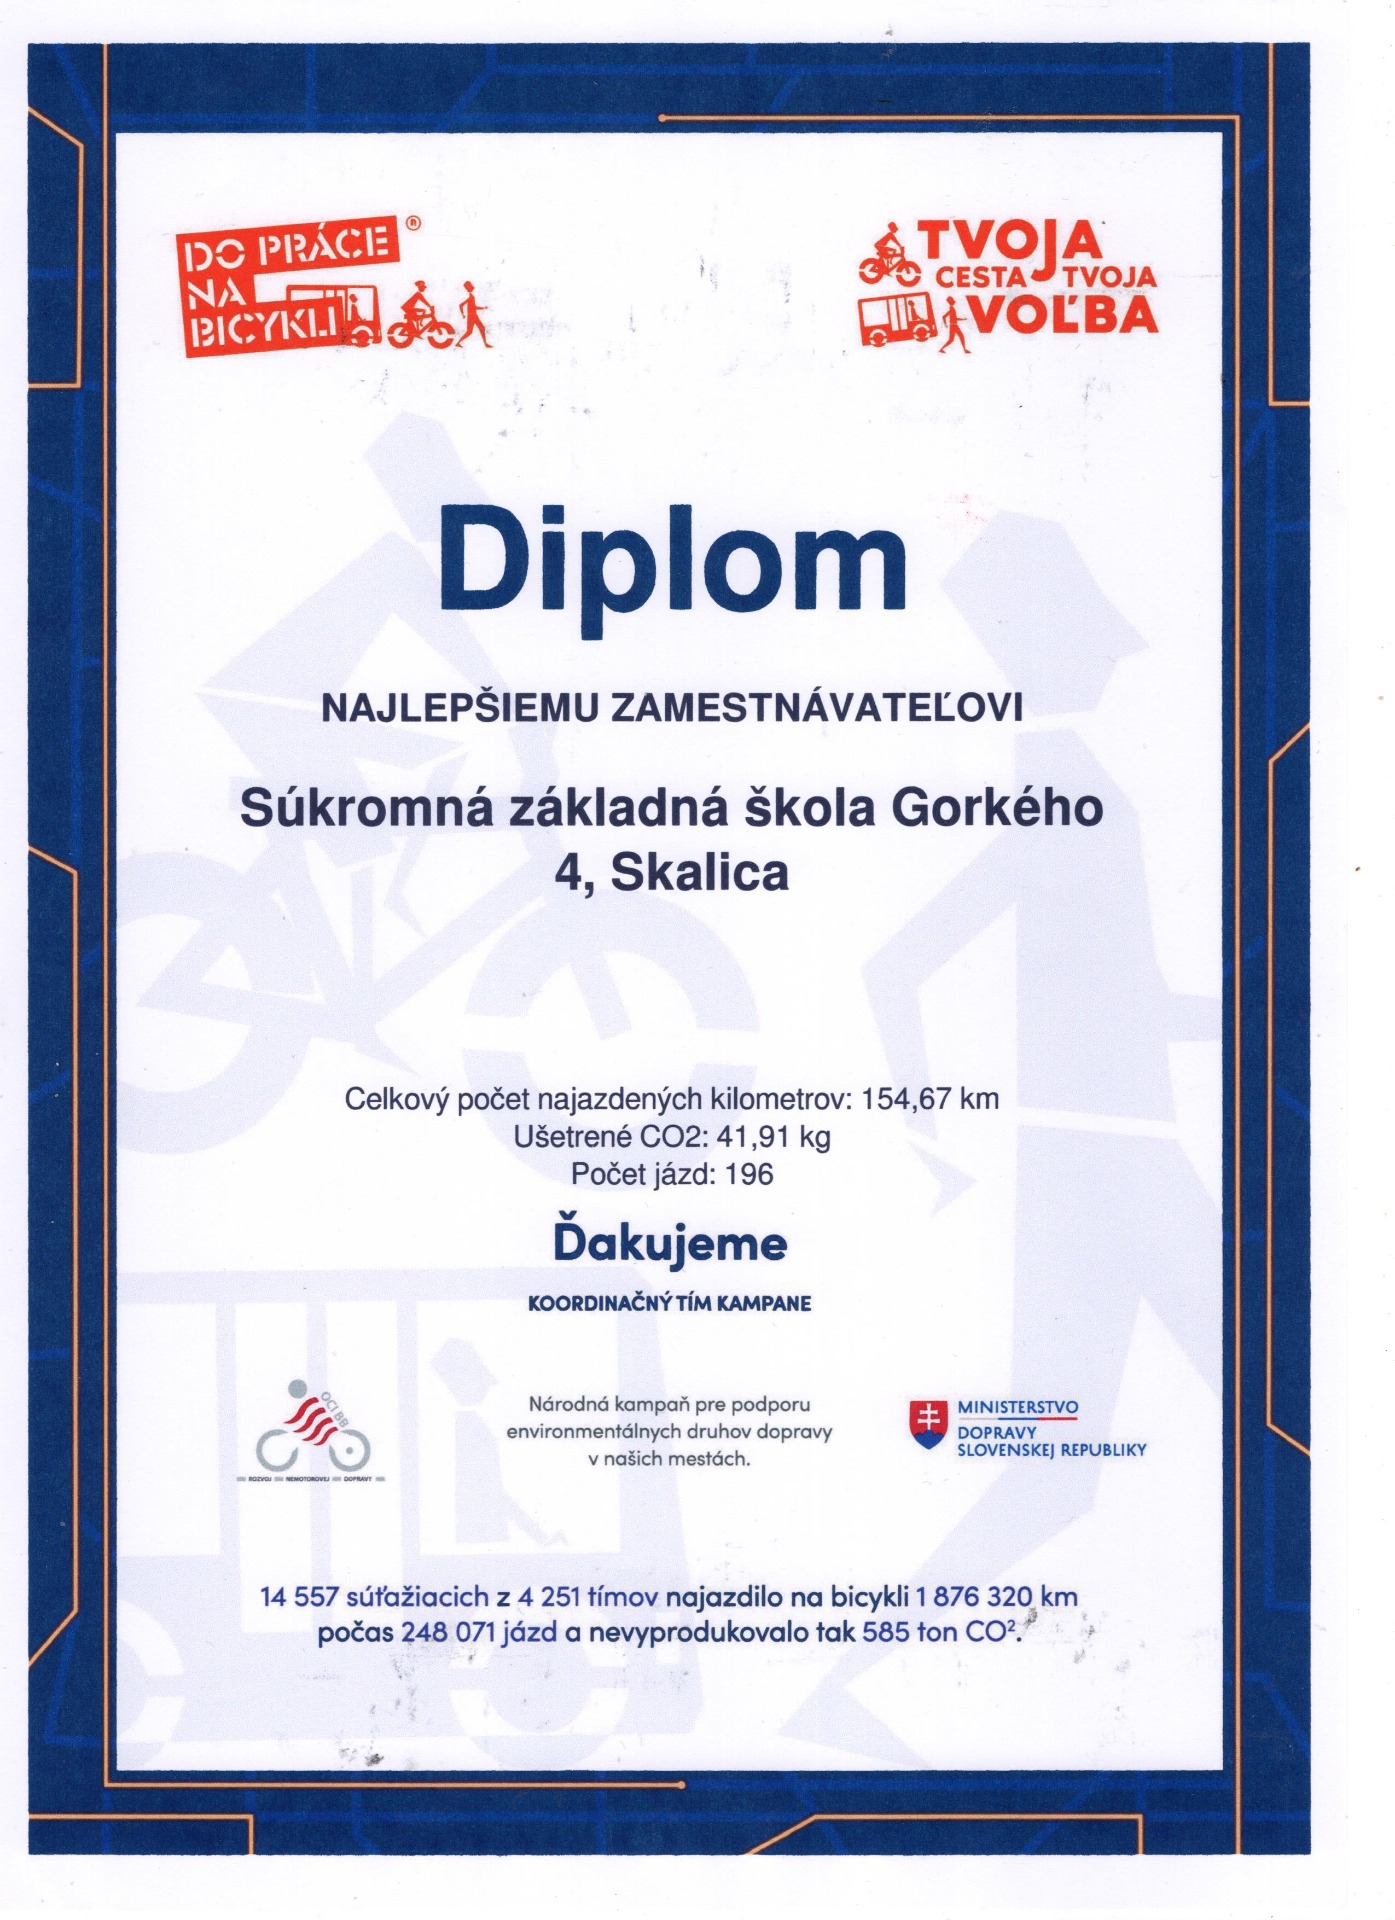 Škola v rámci kampane „Do práce na bicykli“ ocenená aj pani primátorkou mesta Skalica - Obrázok 1